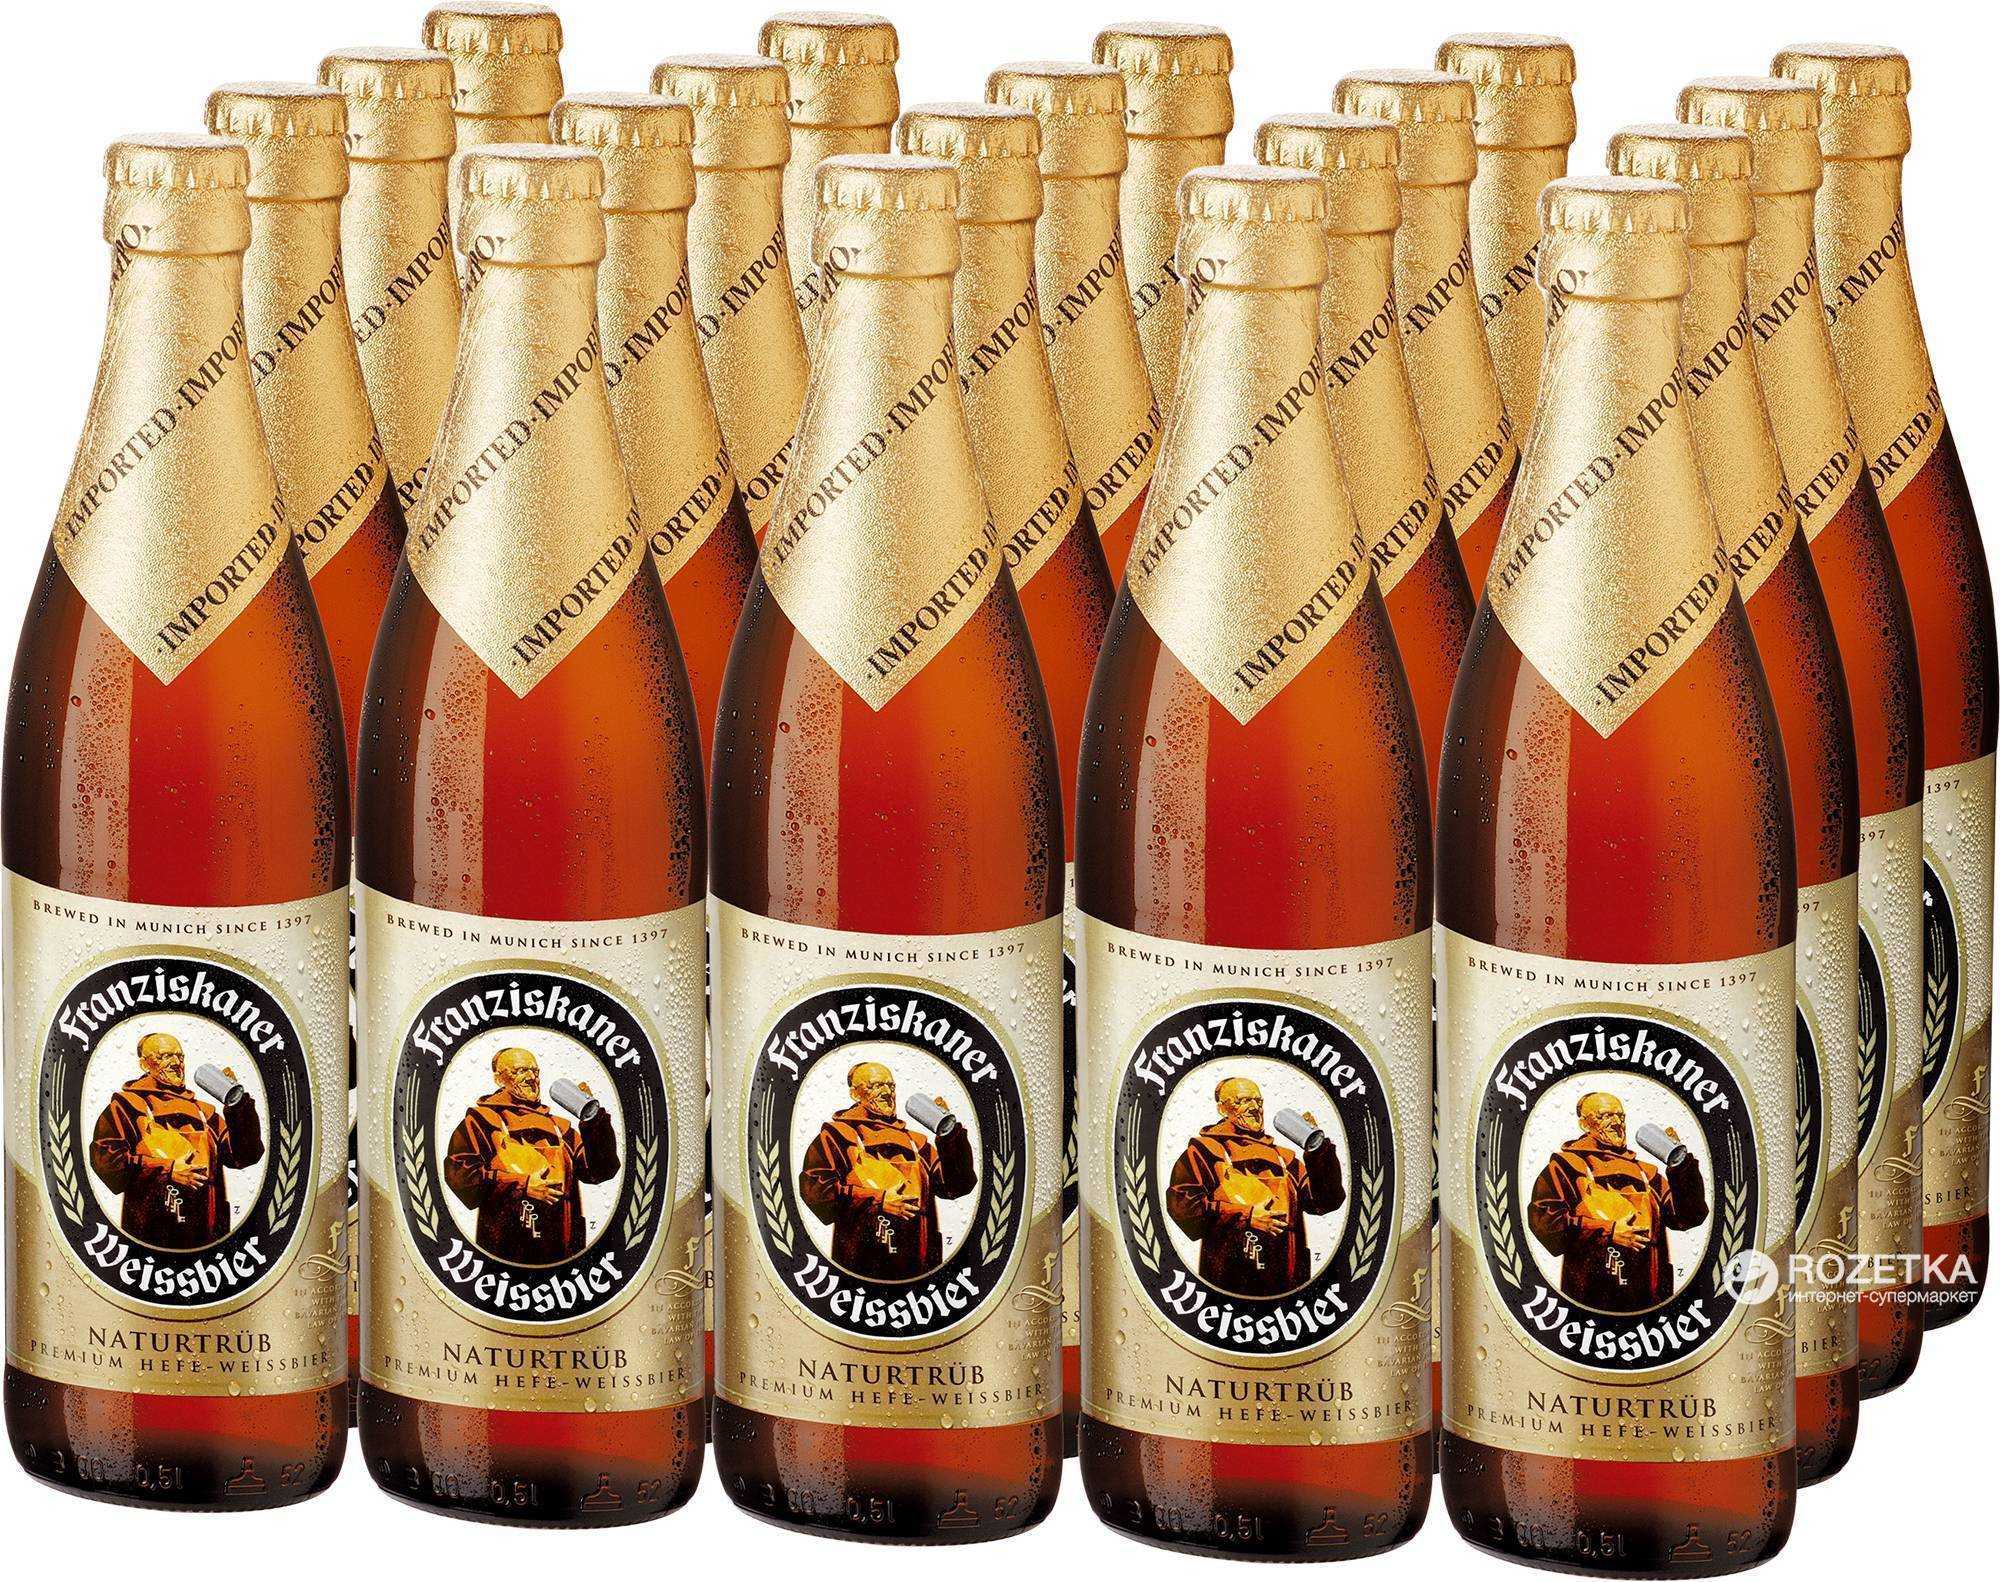 Пиво францисканер (franziskaner) — характеристики бренда, описание и история